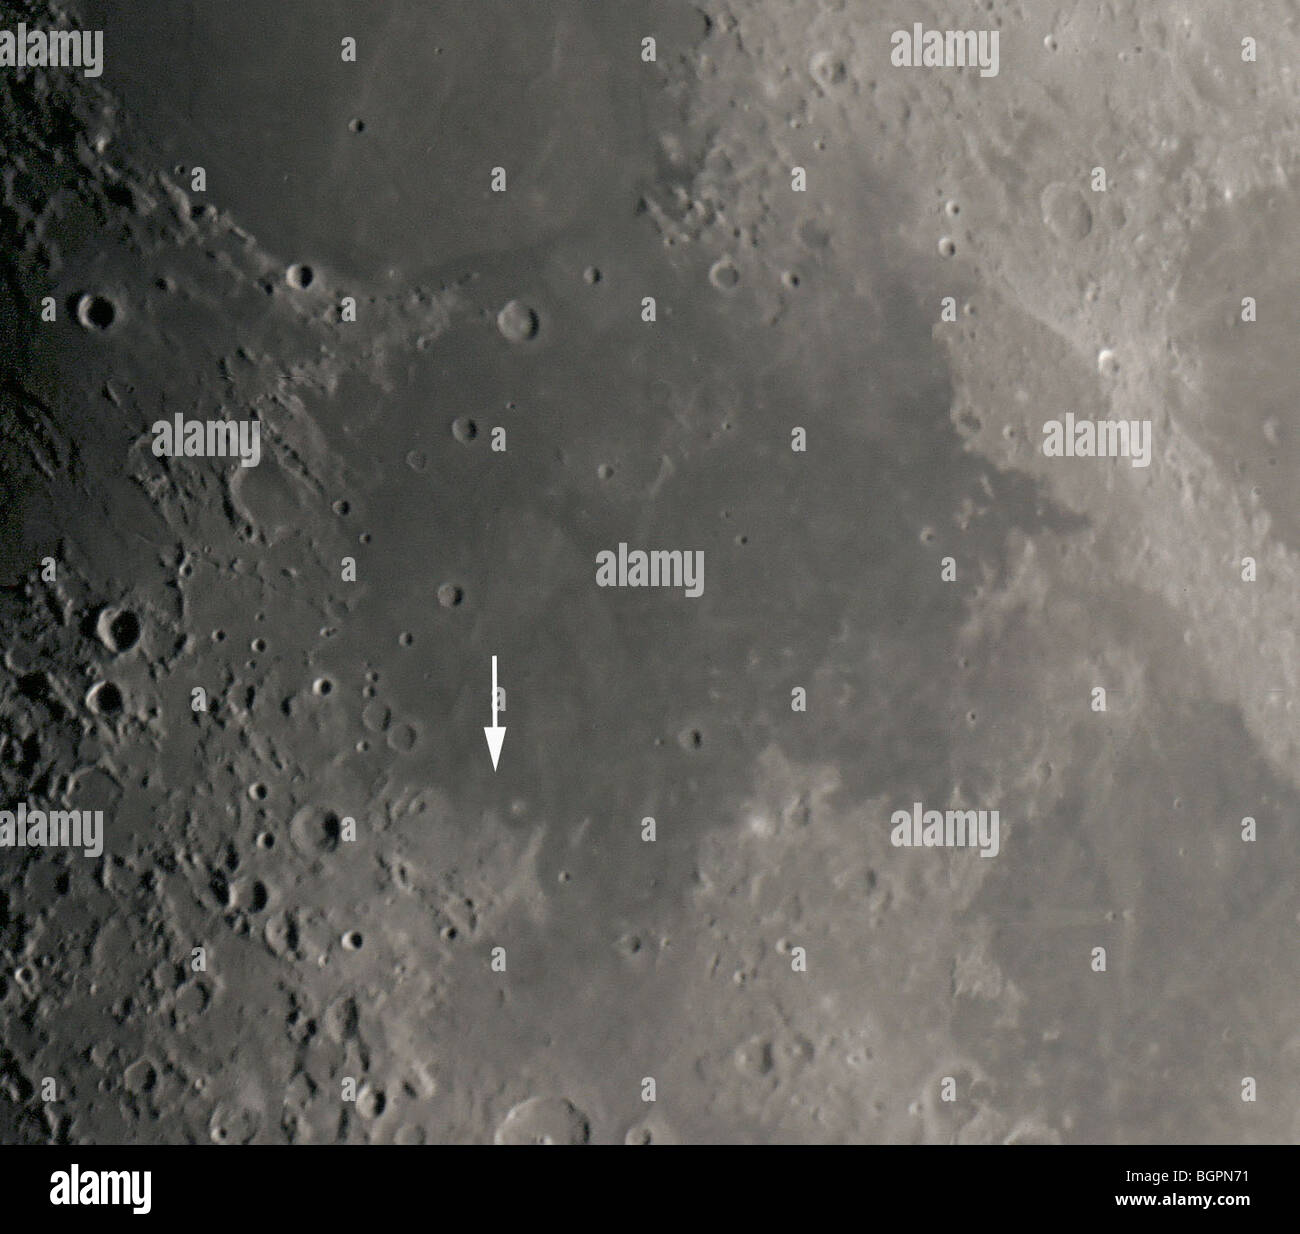 Mare Tranquillitatis. Apollo 11 landing site marked by an arrow. Stock Photo